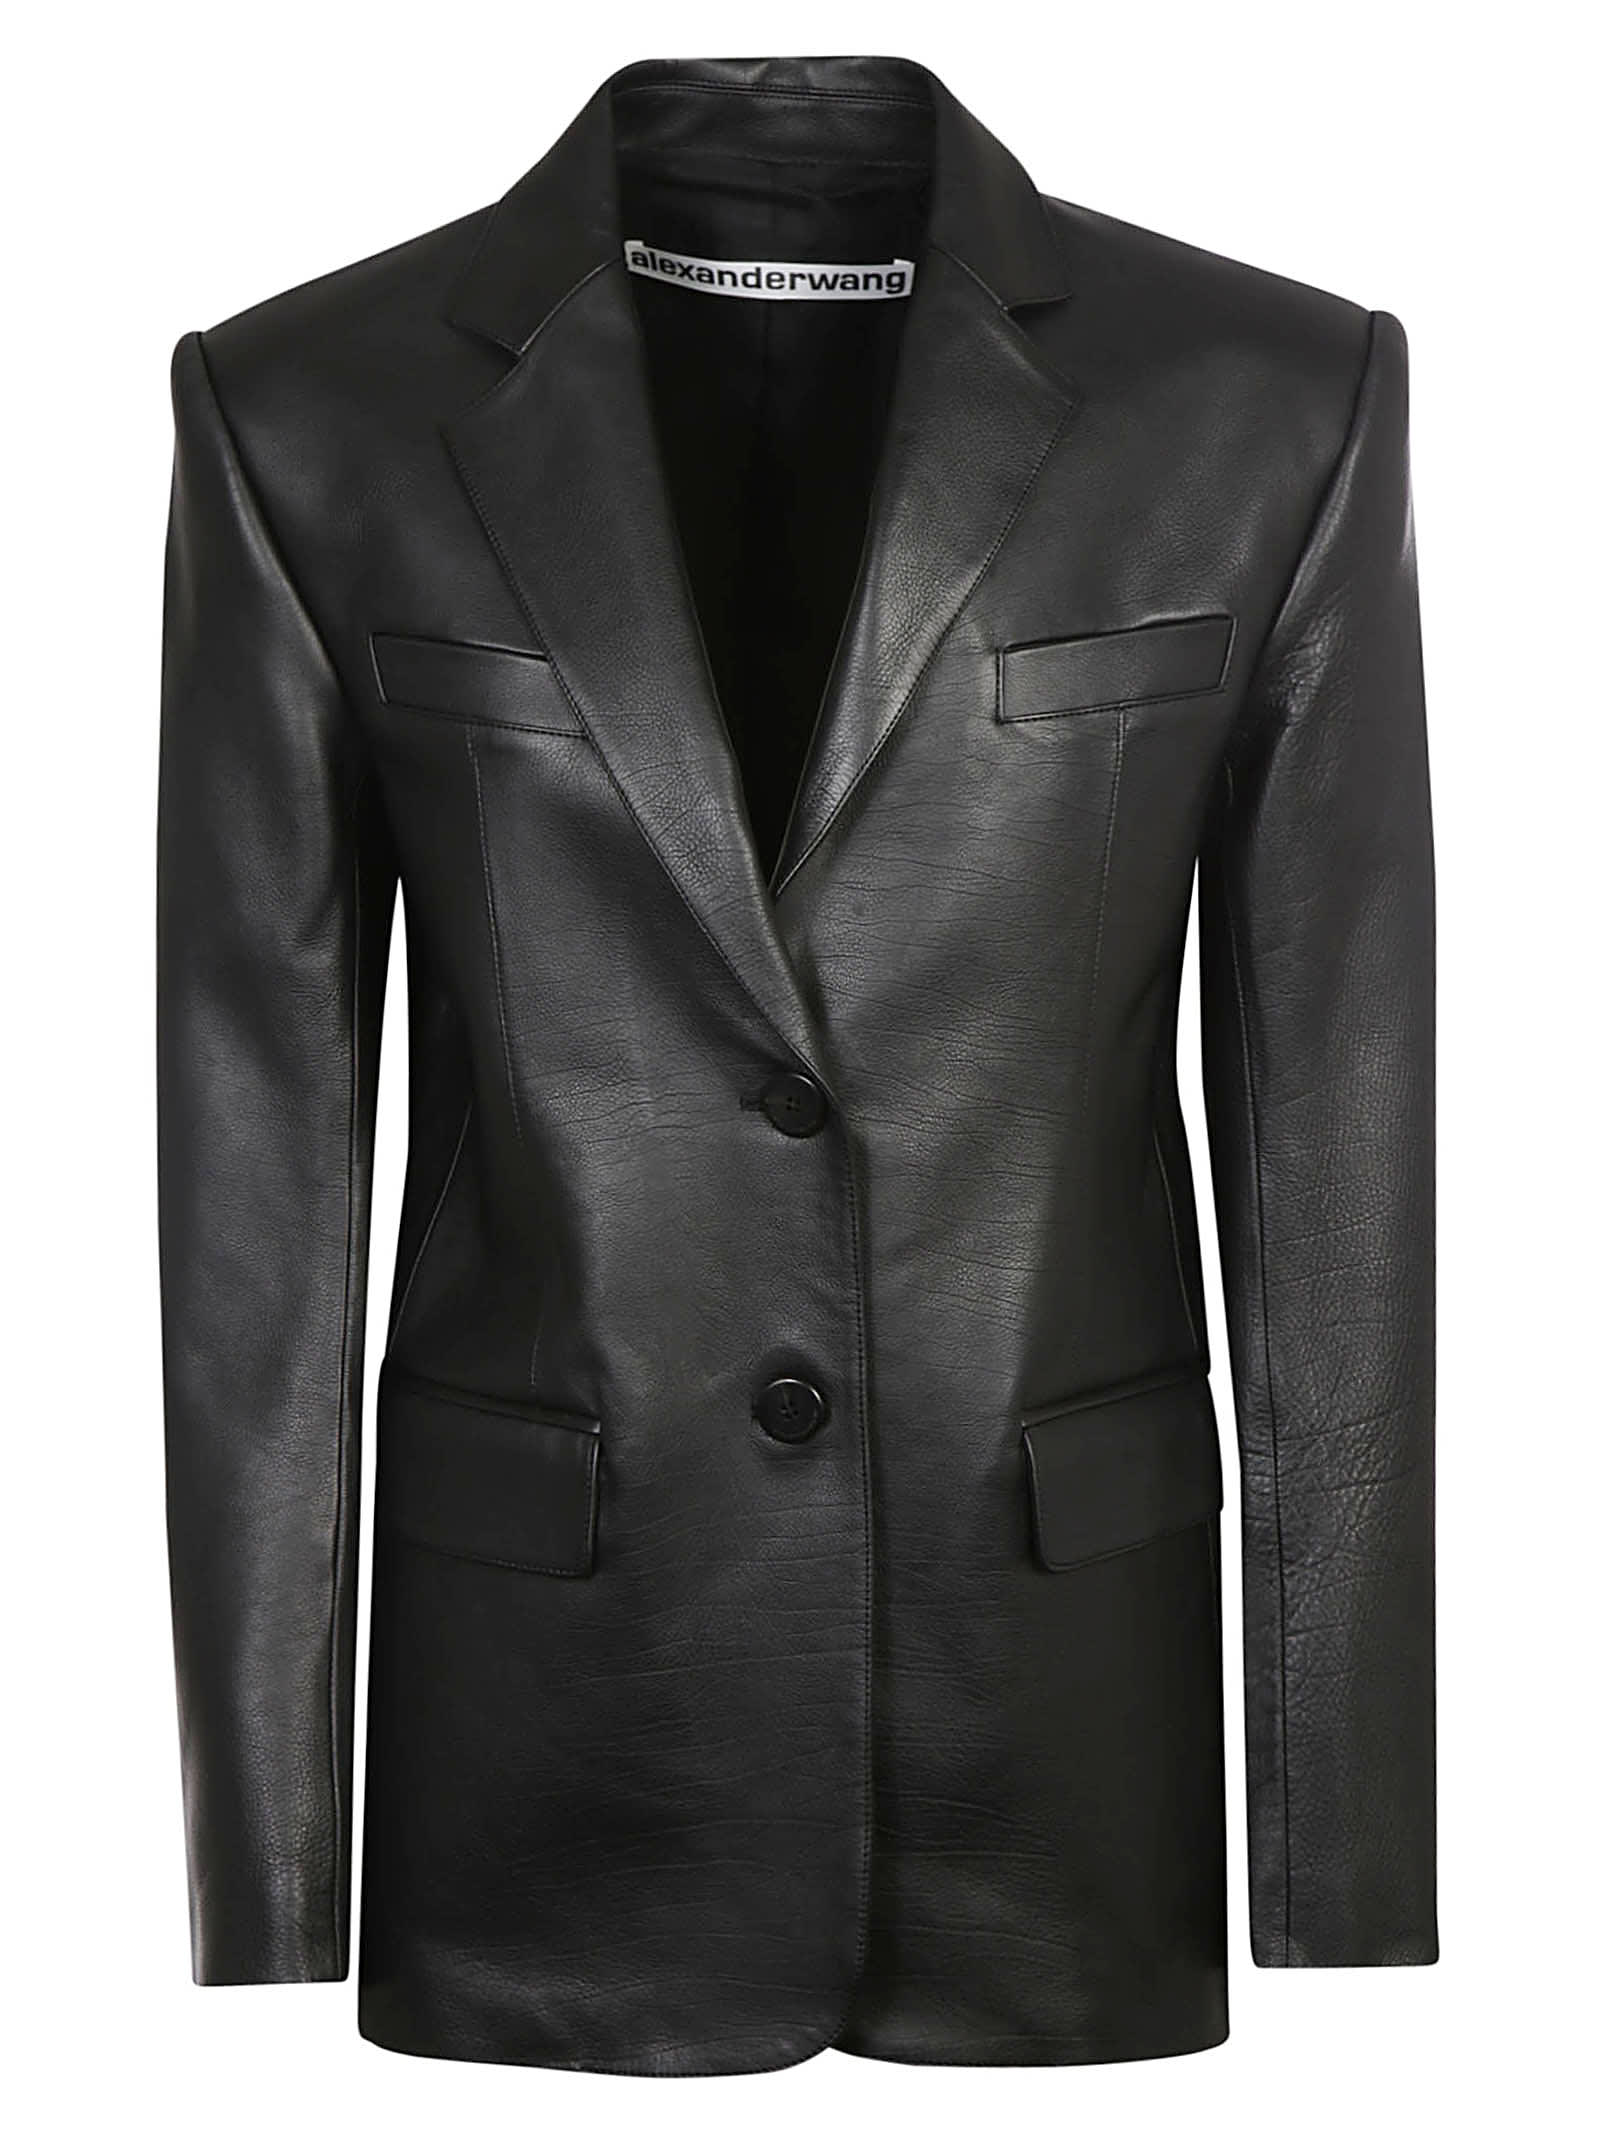 Alexander Wang Leather Jacket